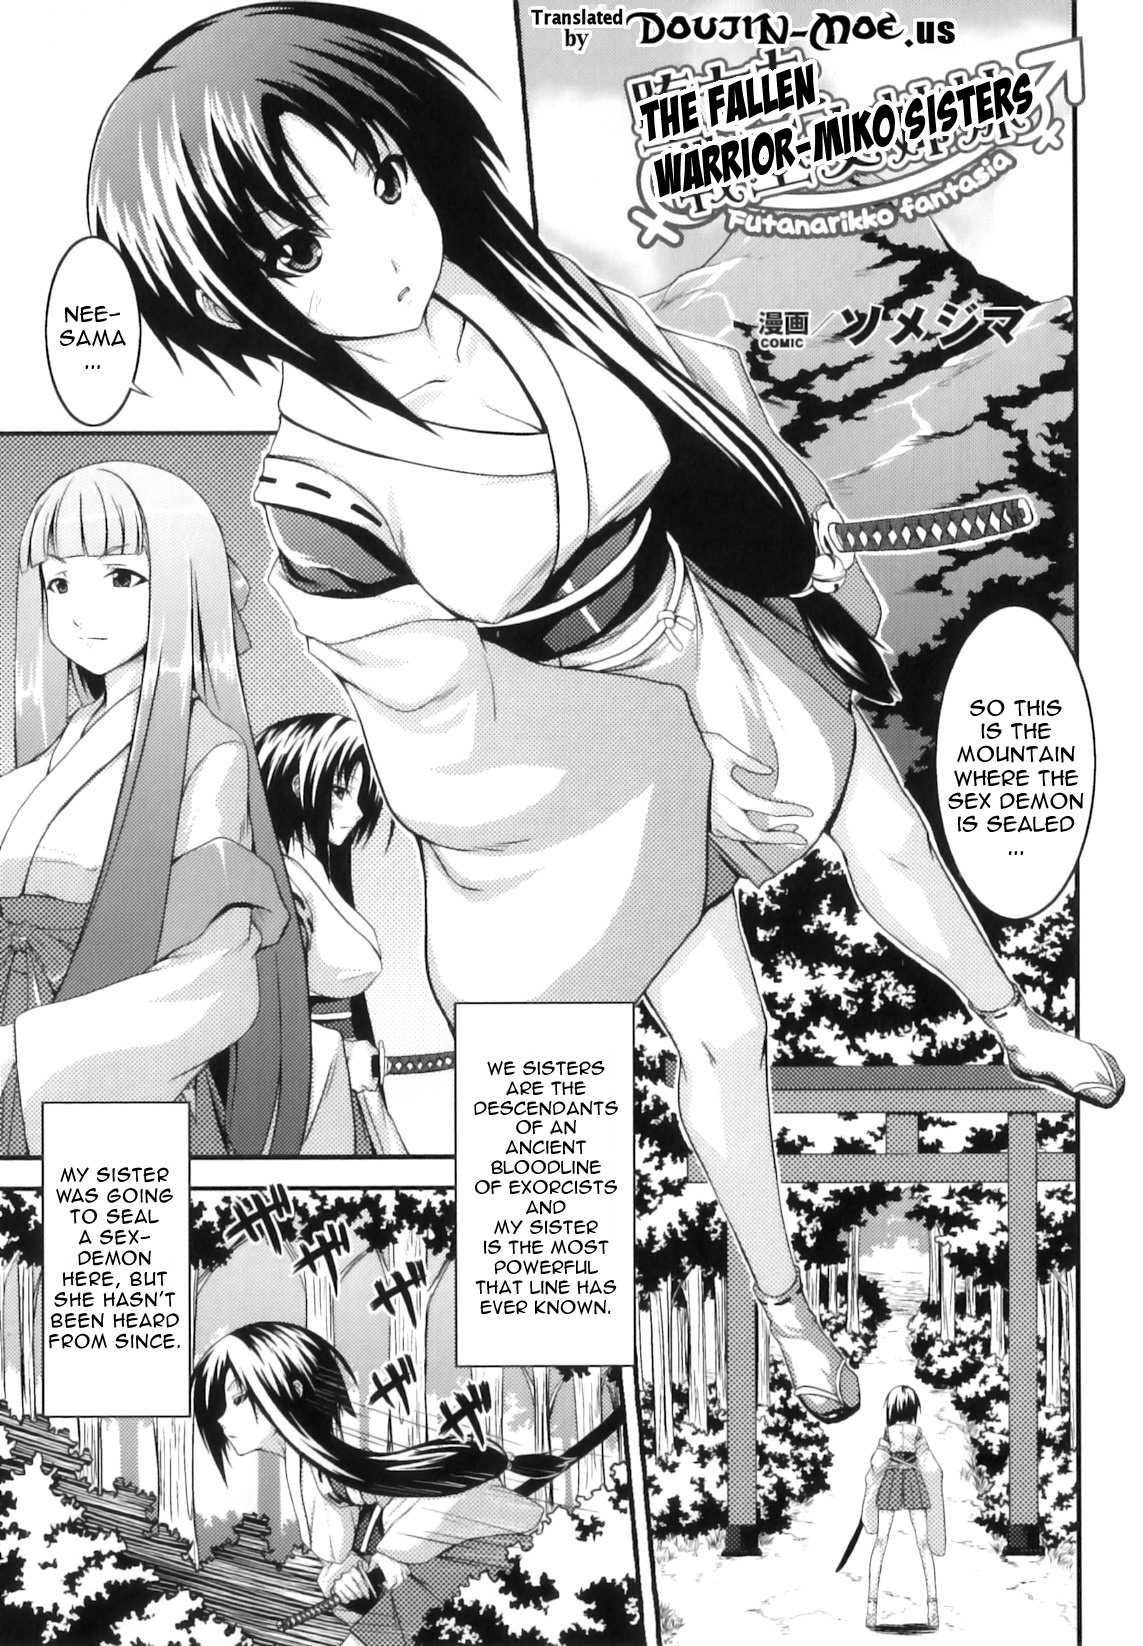 [Somejima] Fall of the Warrior Miko Sisters (English) {doujin-moe.us} 